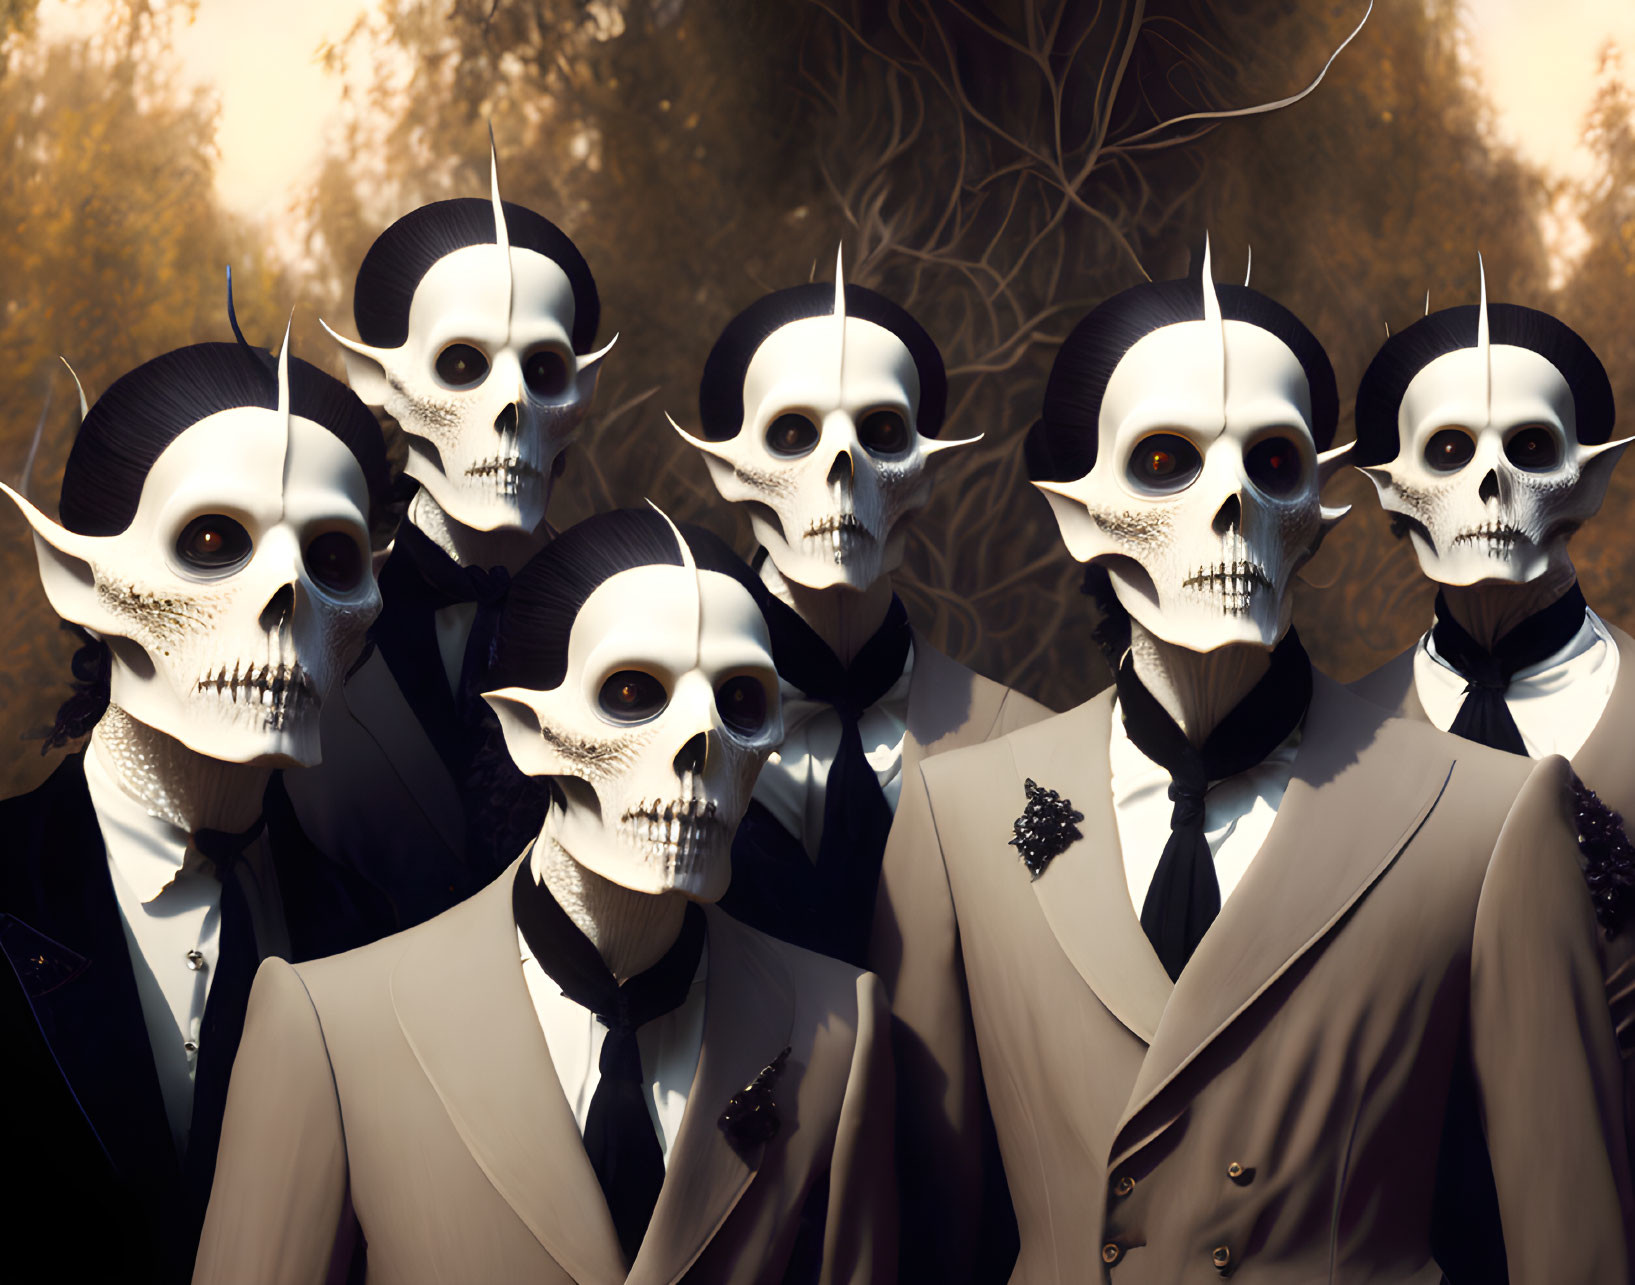 Seven Figures in Skull-Face Masks in Formal Attire Against Autumnal Background